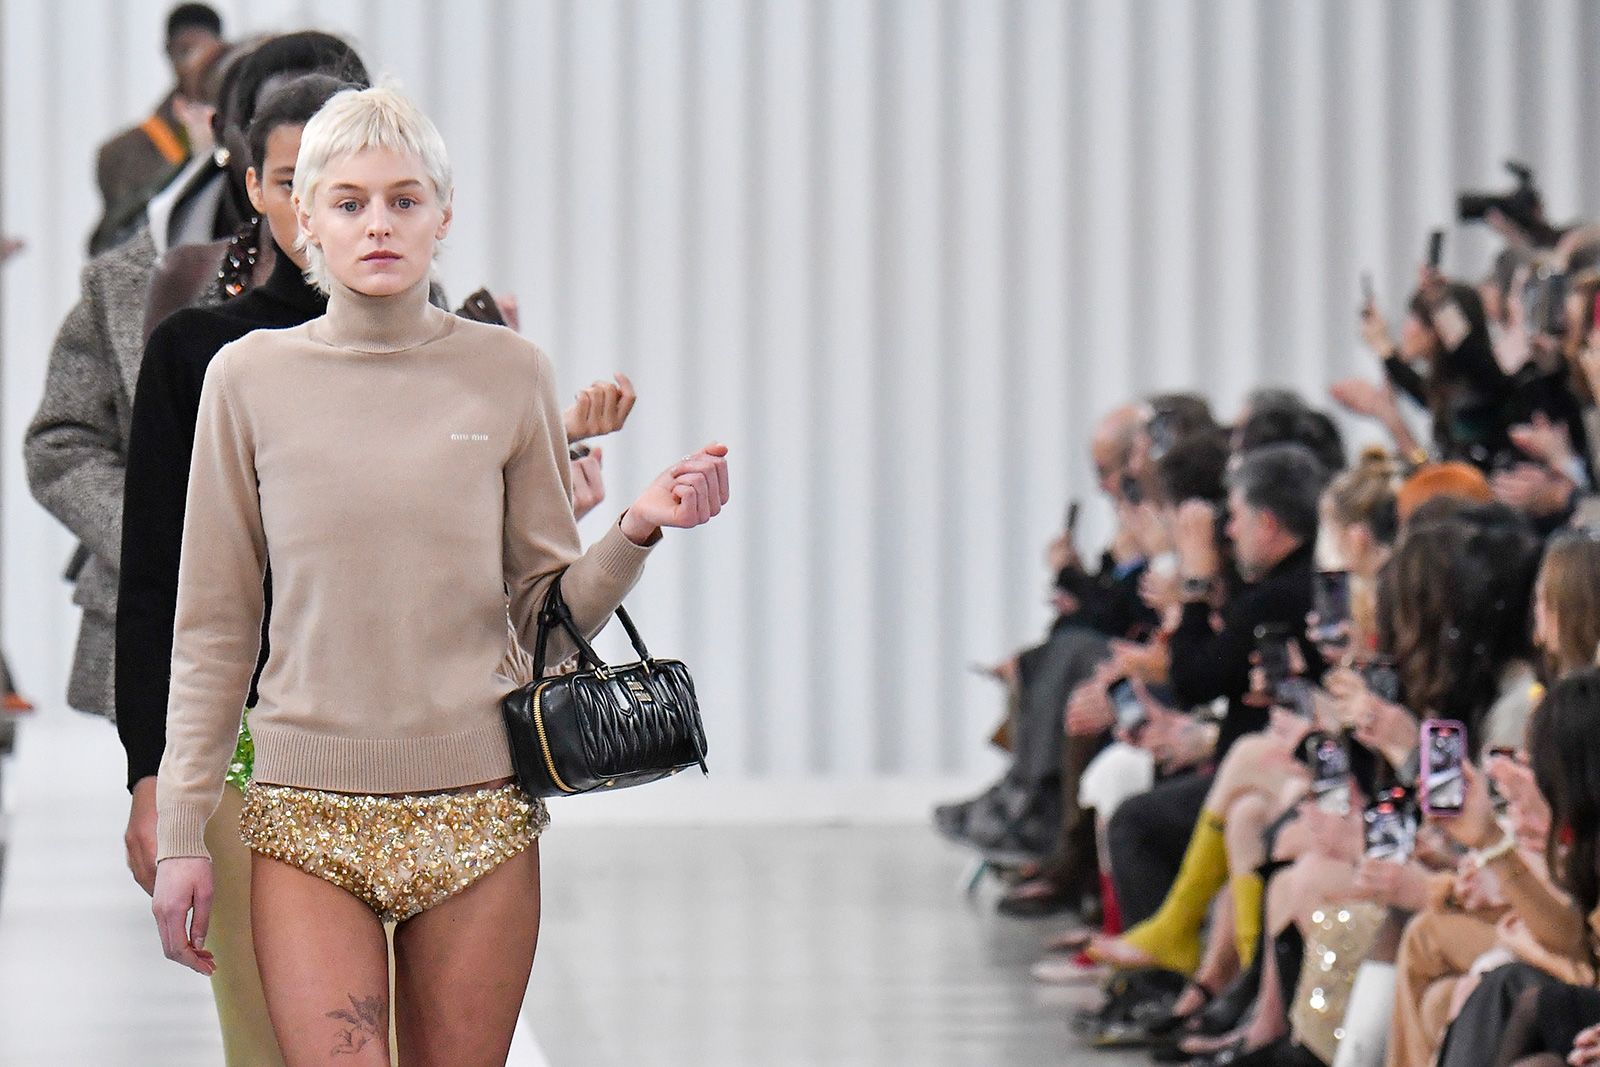 Zendaya's viral daring dress for the Louis Vuitton Paris Fashion Week show